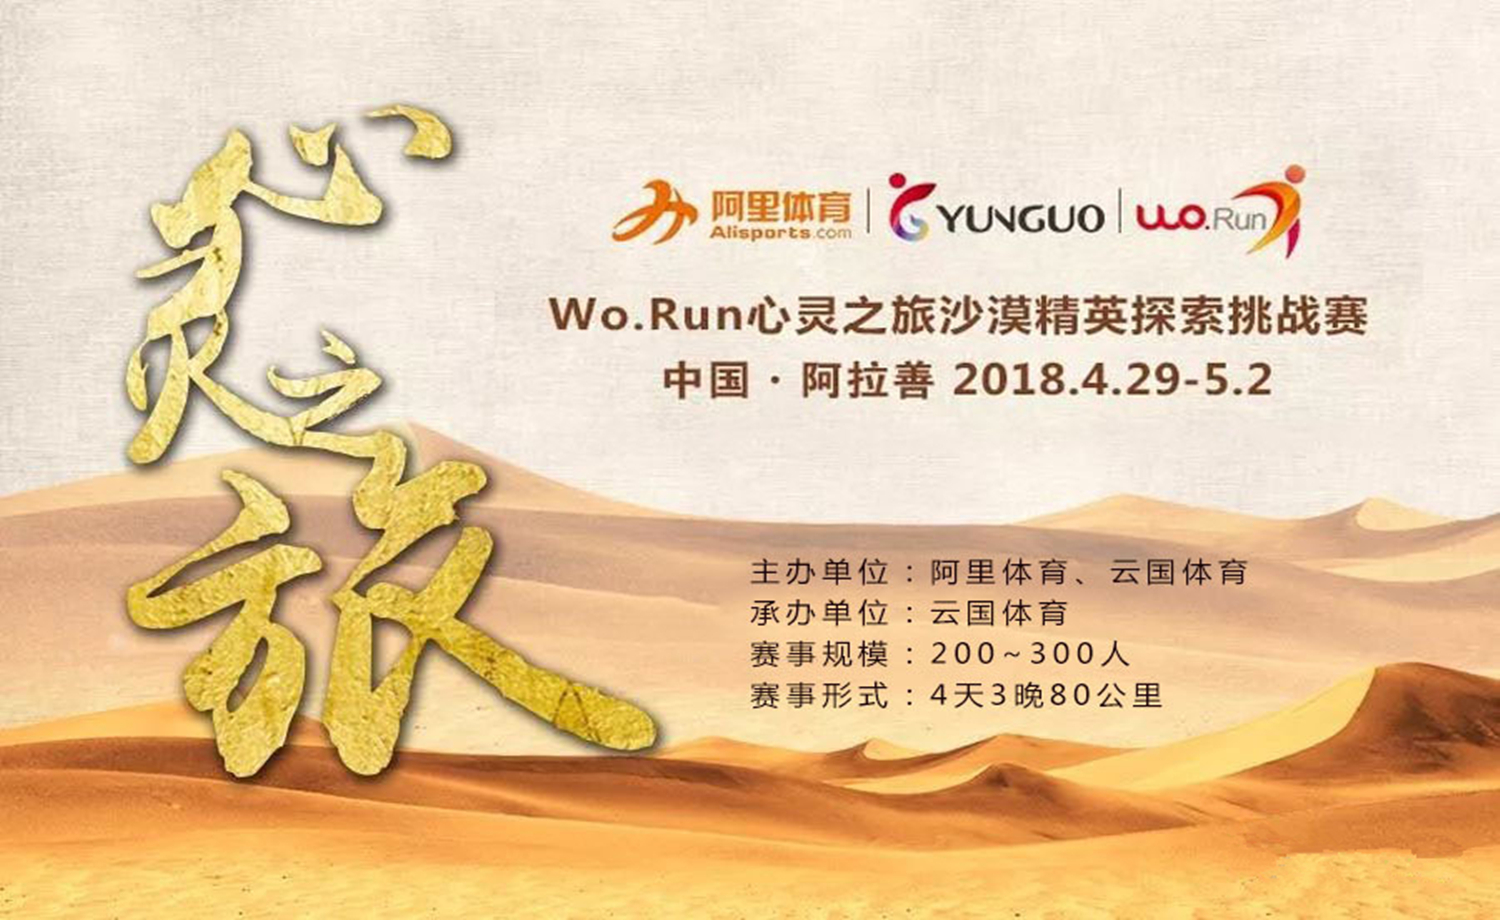 Wo.Run心灵之旅沙漠精英探索挑战赛